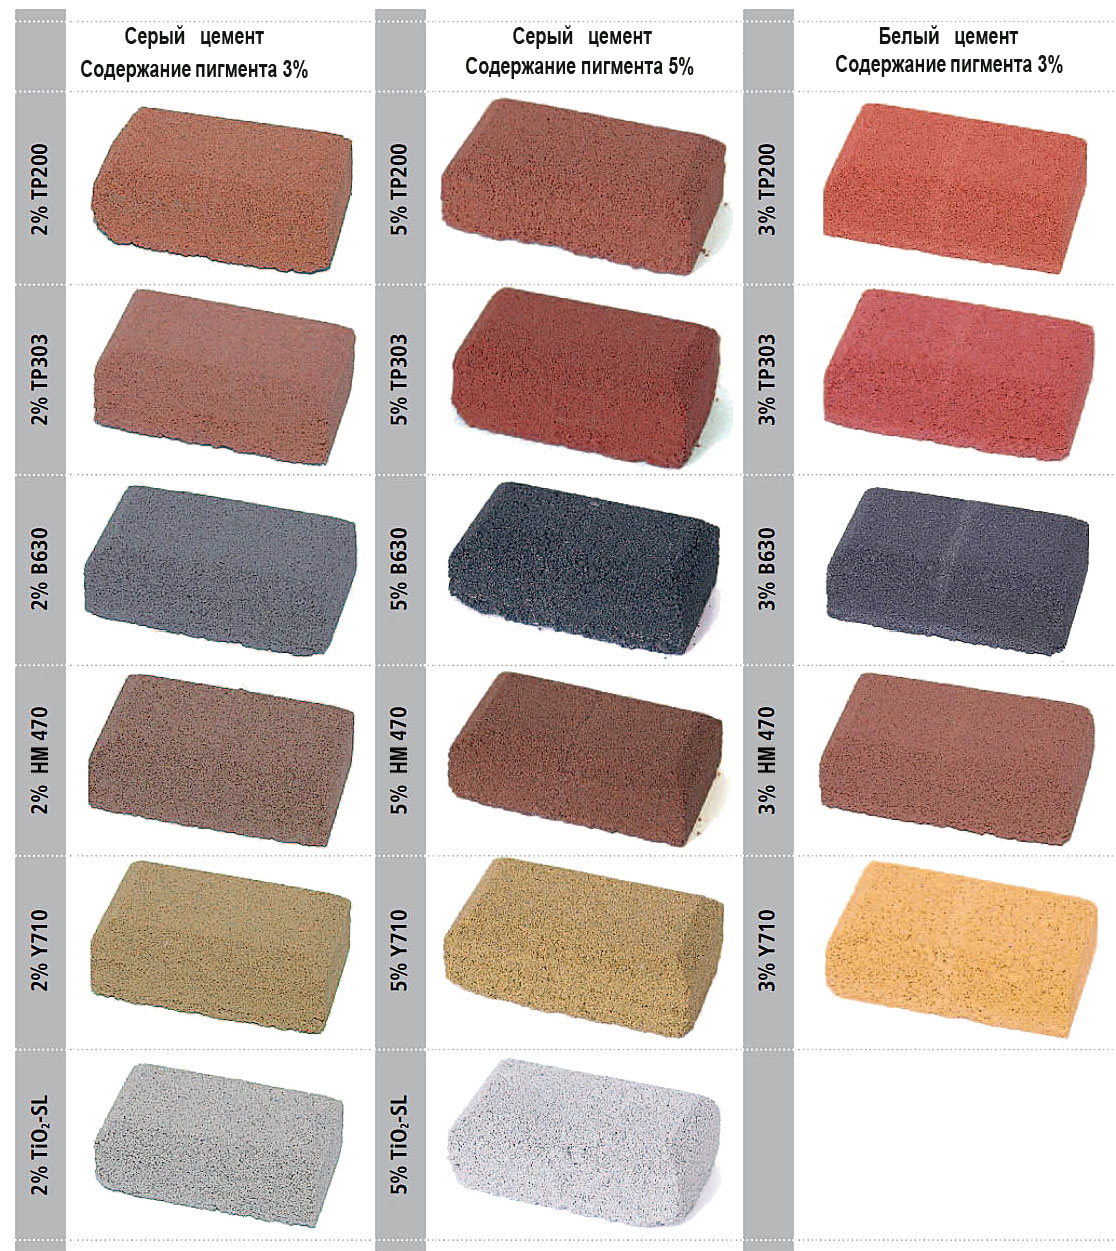 влияние цвета цемента и дозировки пигмента Fepren в цветном бетоне